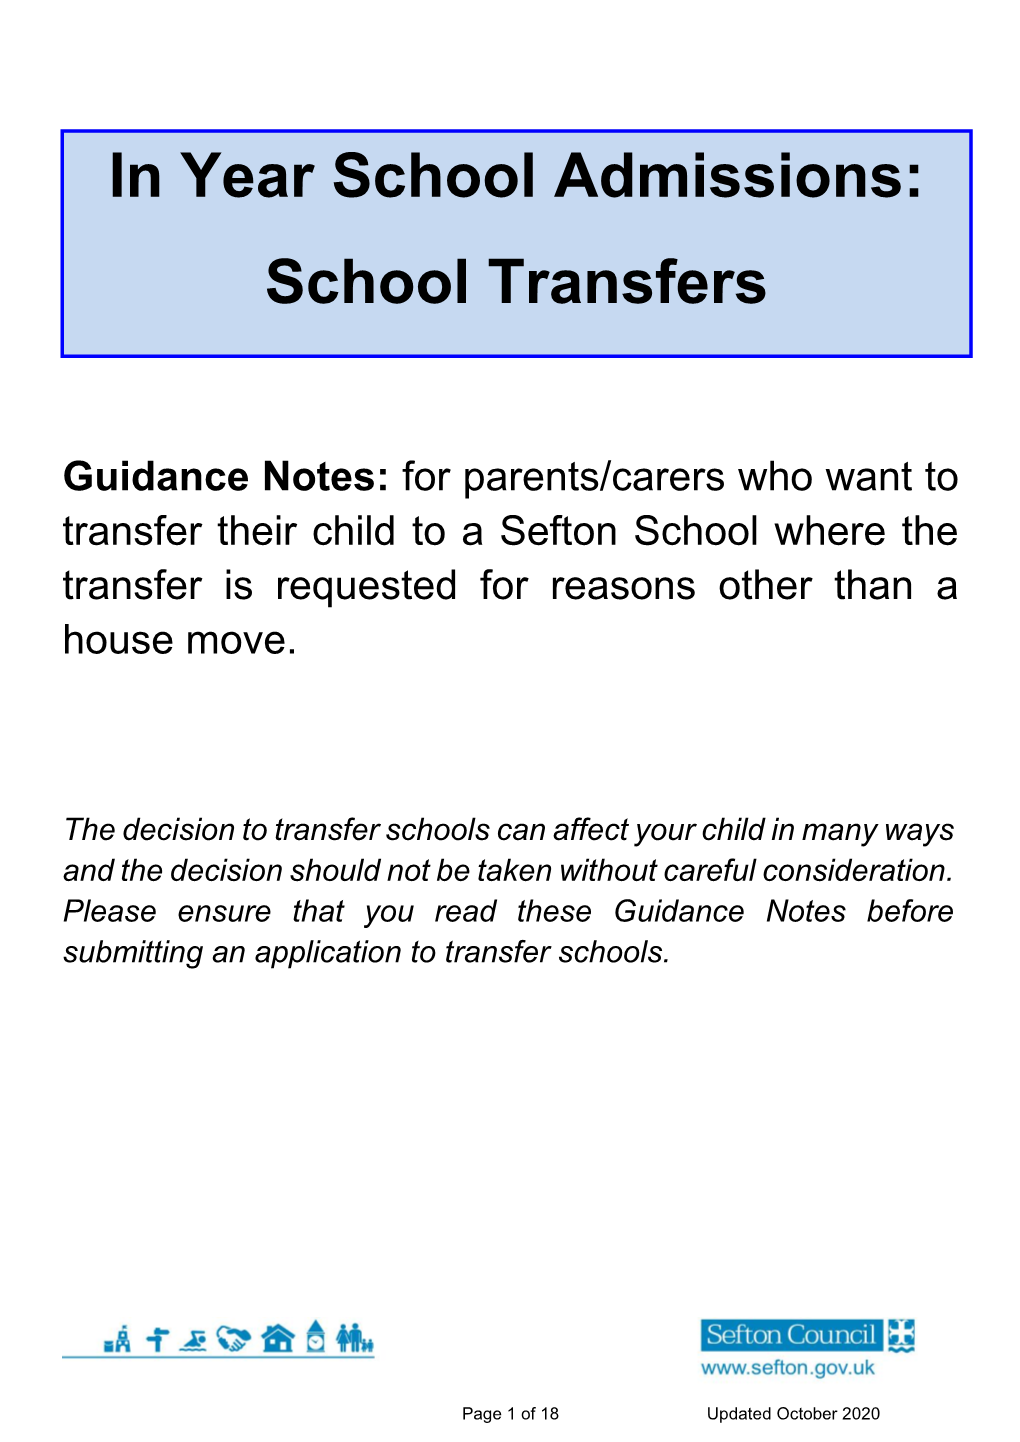 In Year School Admissions: School Transfers